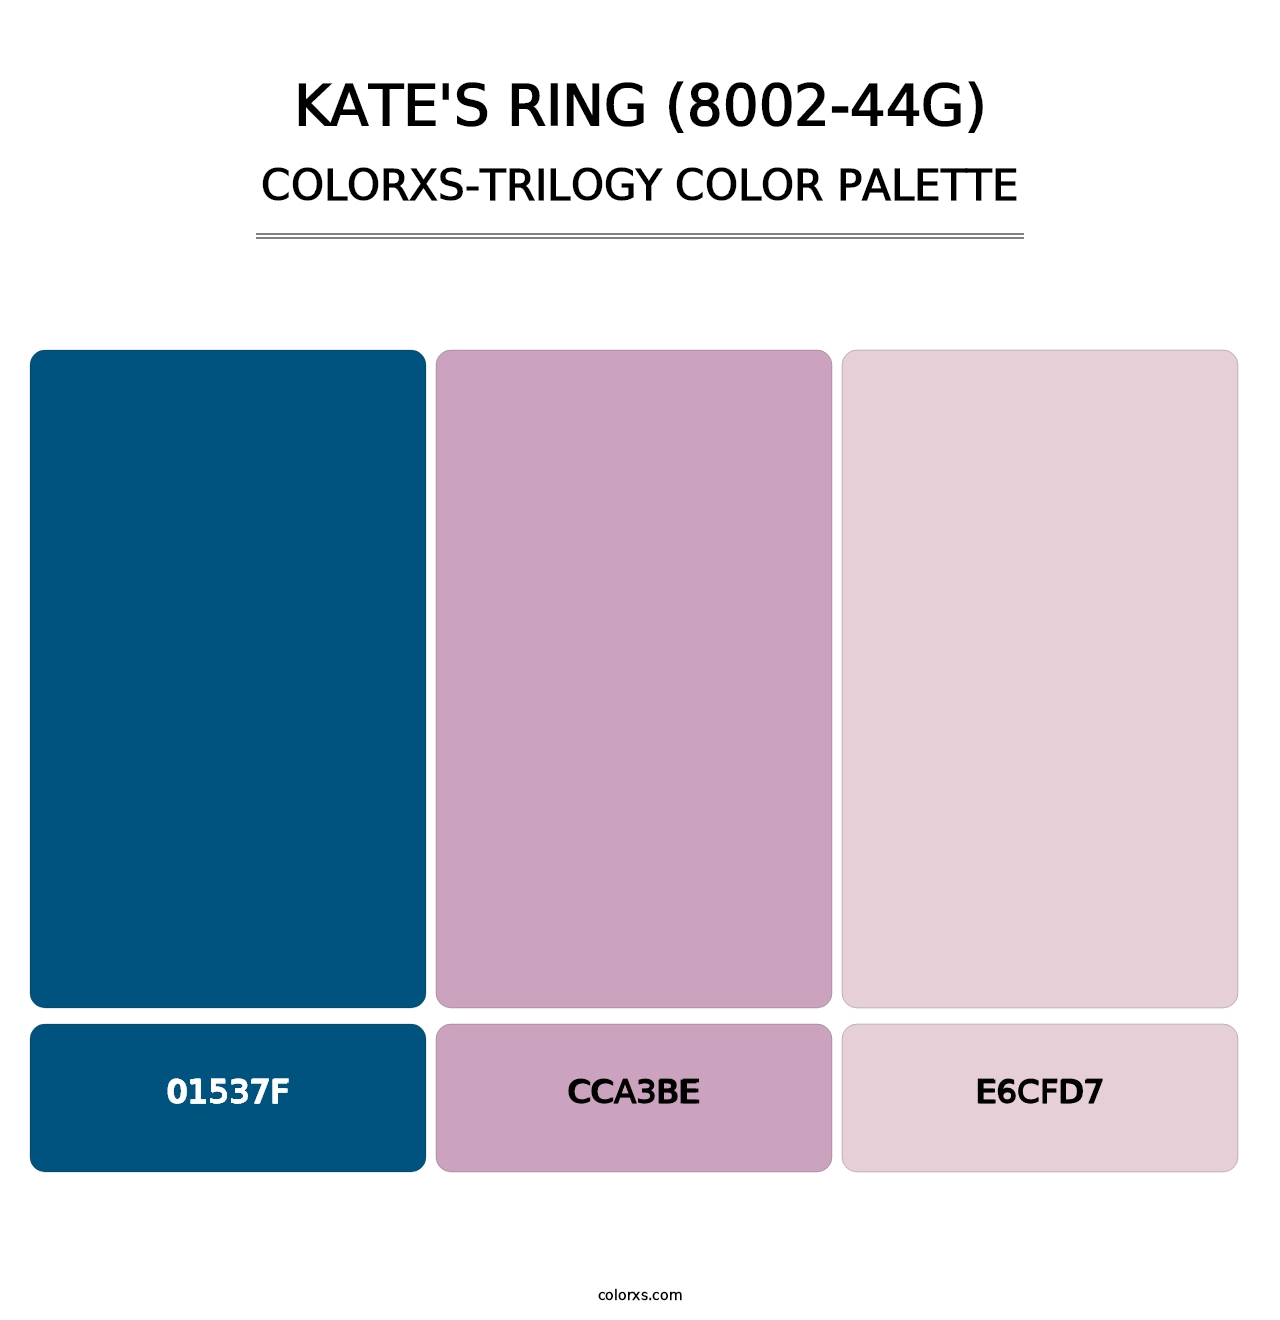 Kate's Ring (8002-44G) - Colorxs Trilogy Palette